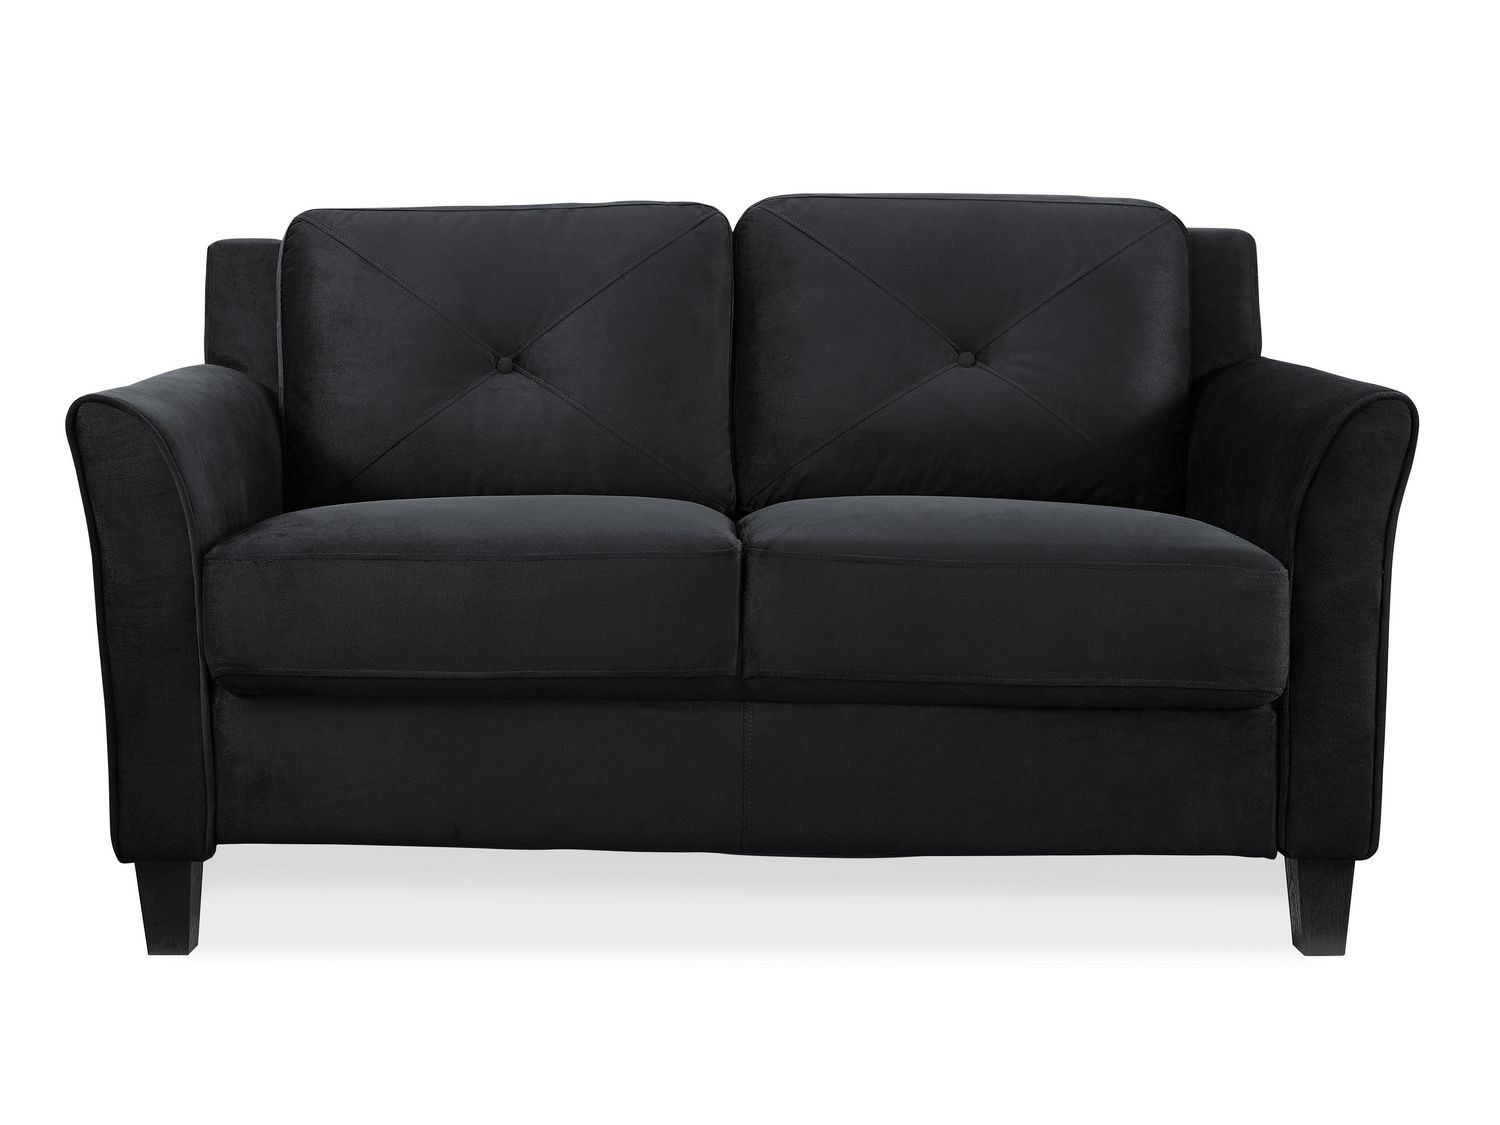 Best ideas about Sleeper Sofa Walmart
. Save or Pin Furniture Walmart Sleeper Sofa Now.